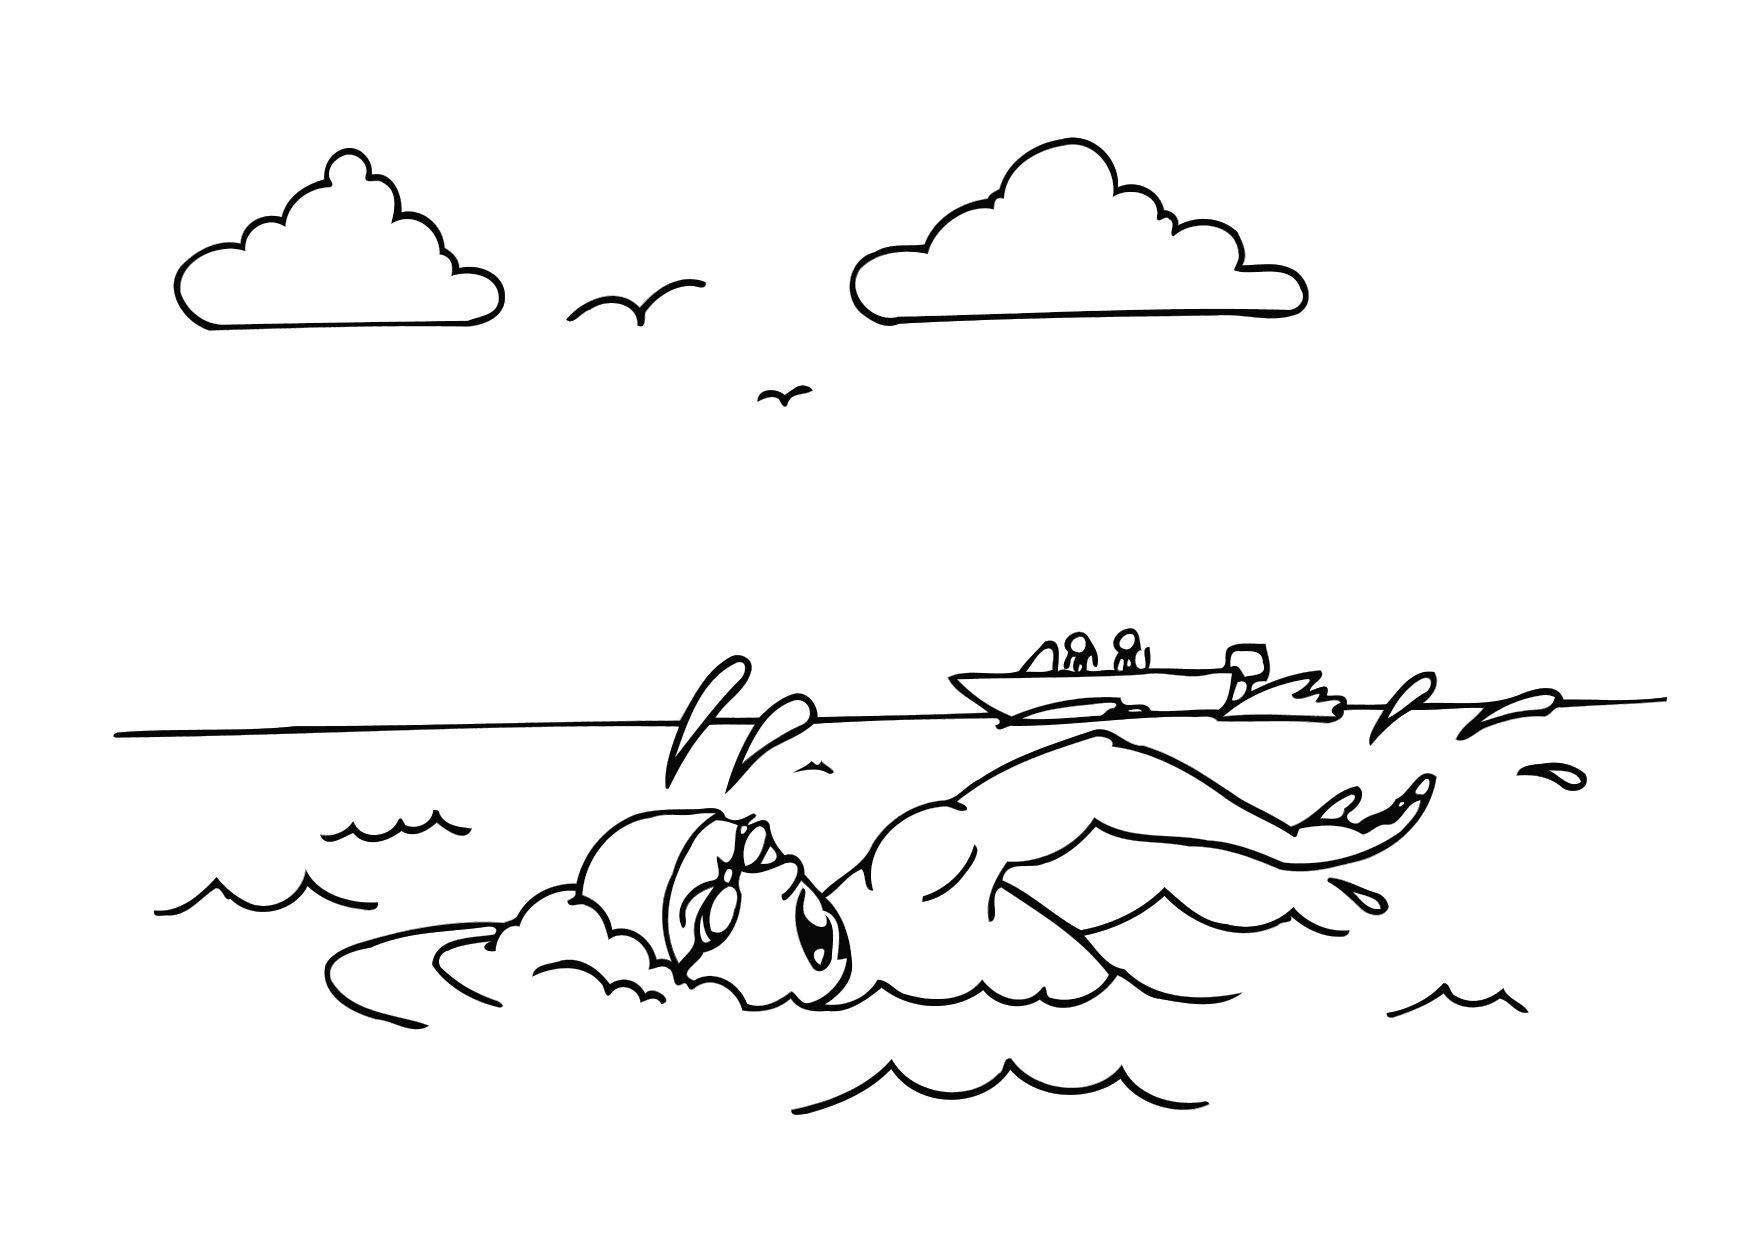 Раскраска водой картинка. Плавание раскраска. В море. Раскраска. Плавать раскраска для детей. Плавание раскраска для детей.